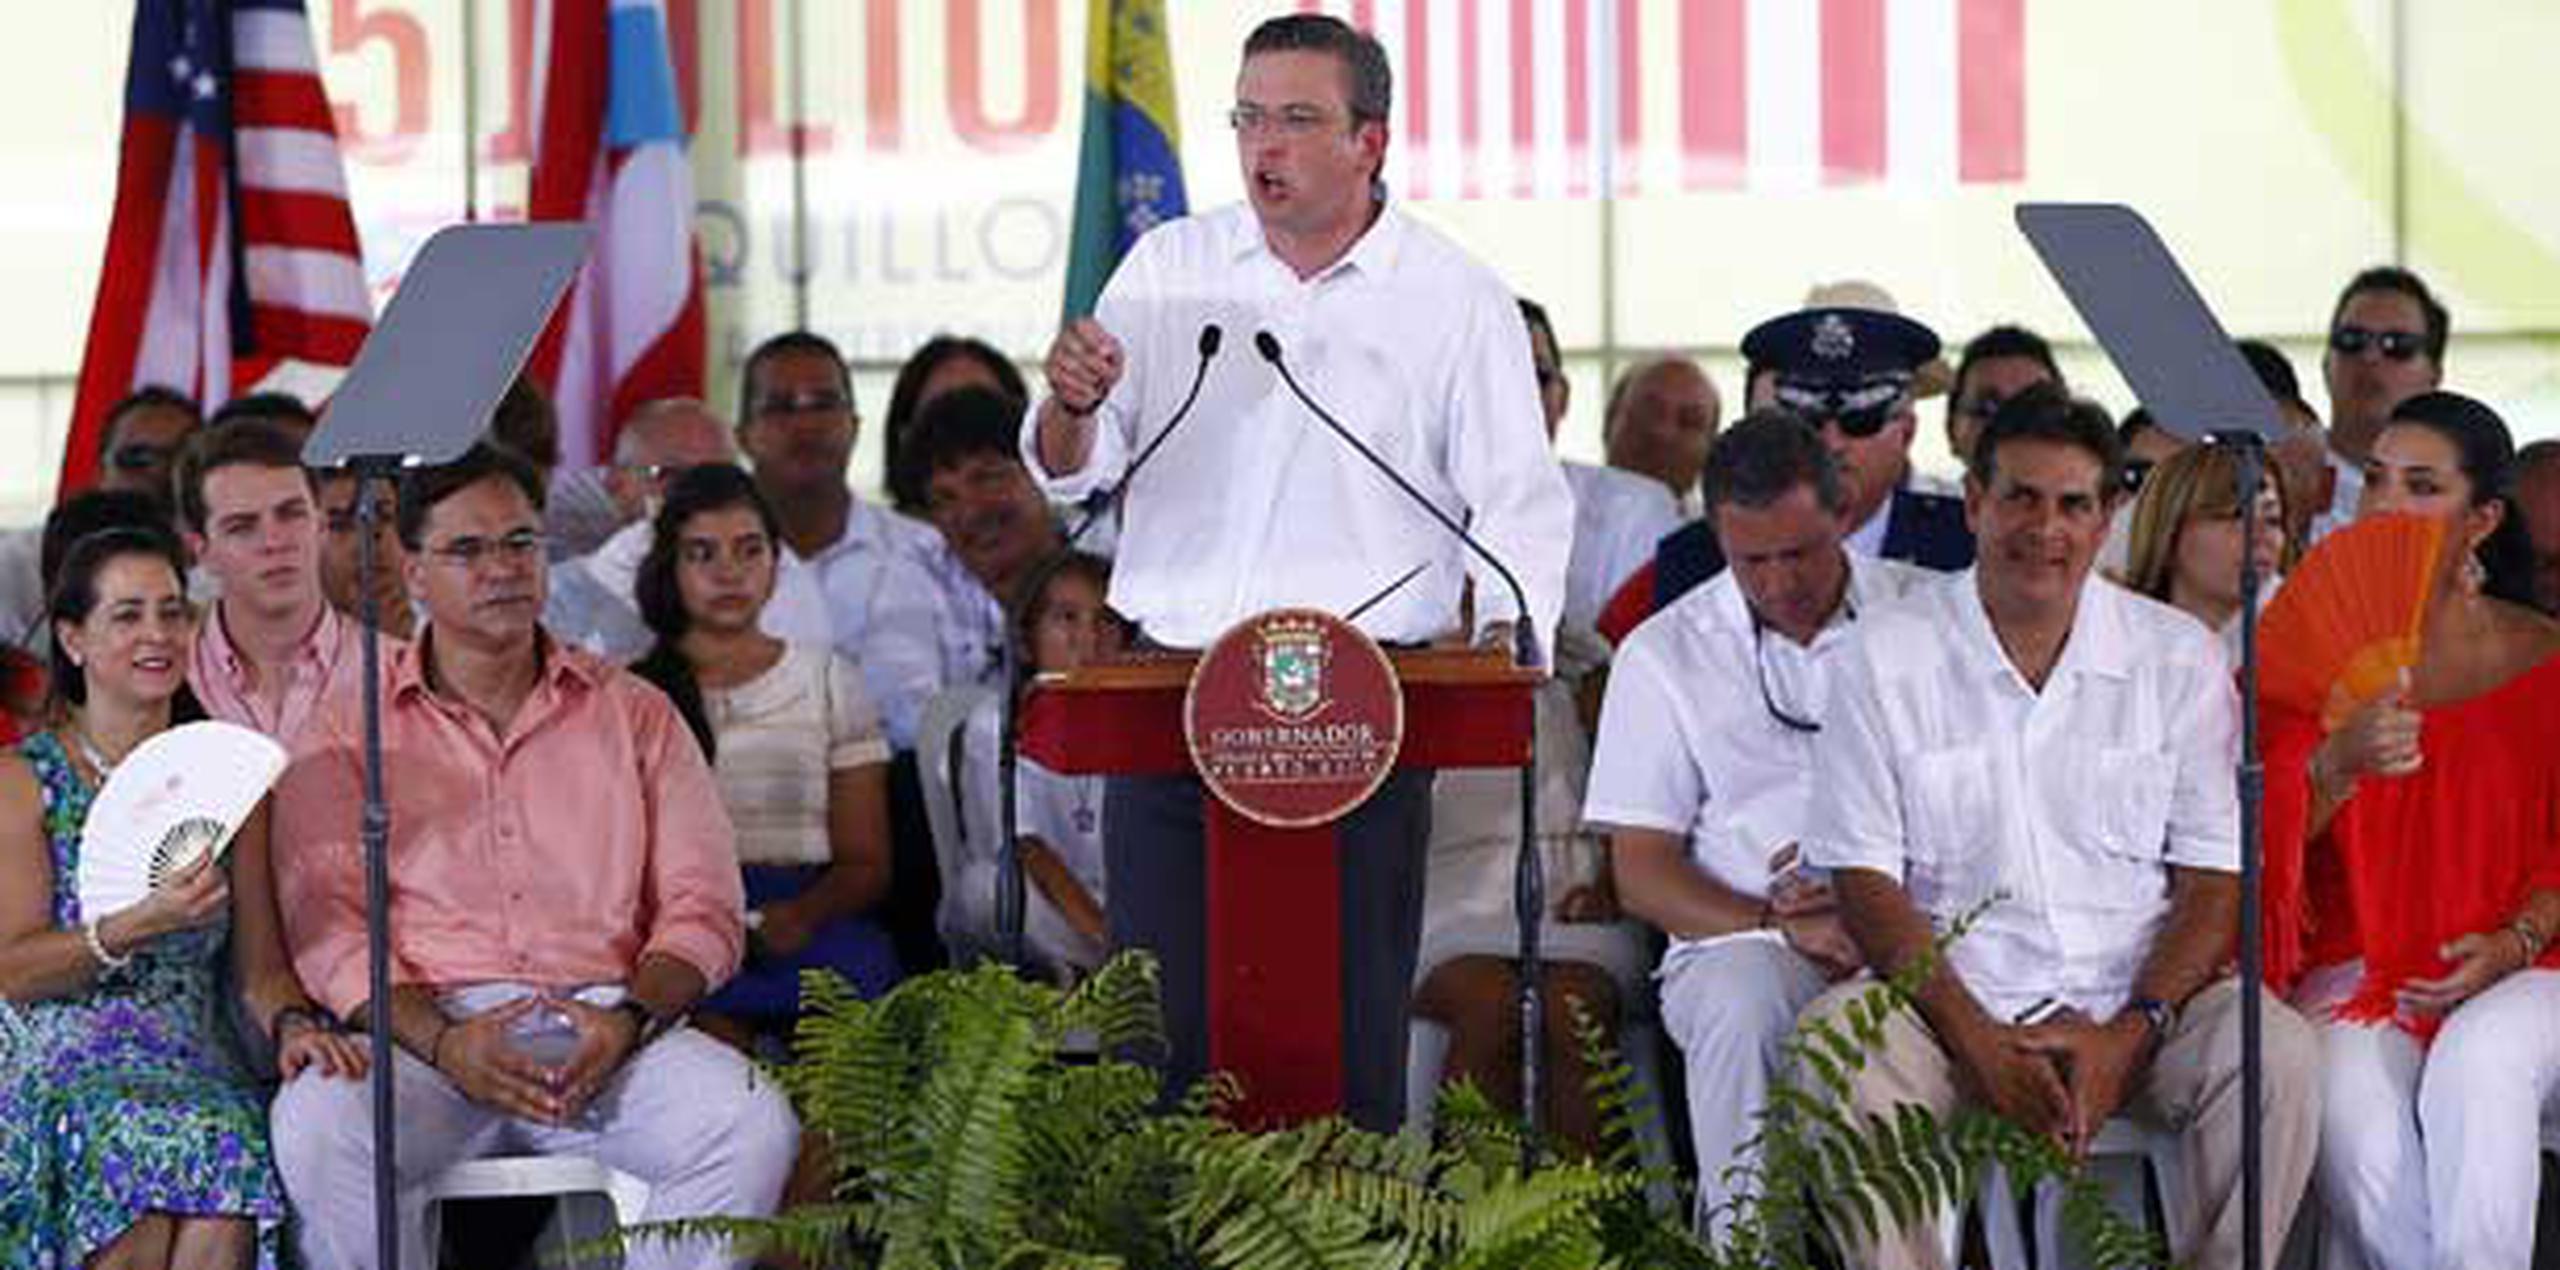 El gobernador Alejandro García Padilla se dirigió a los presentes.  (tony.zayas@gfrmedia.com)